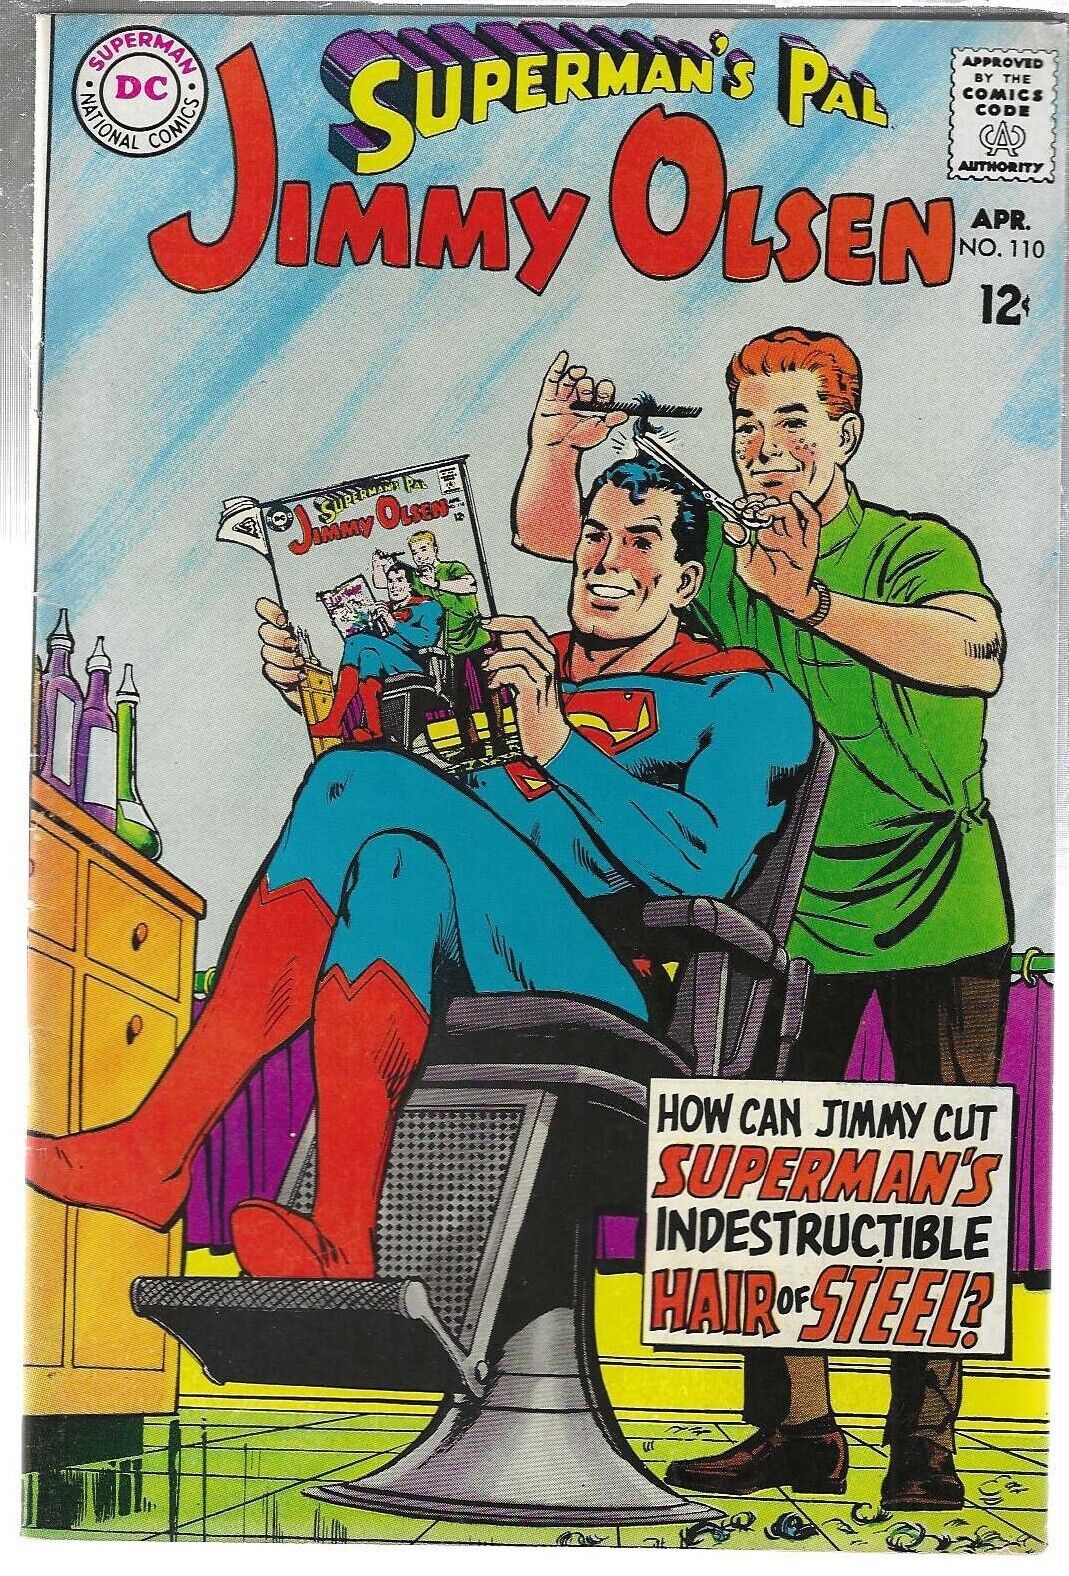 SUPERMAN'S PAL JIMMY OLSEN #110 DC COMICS 1968 NEAL ADAMS COVER HTF GEM